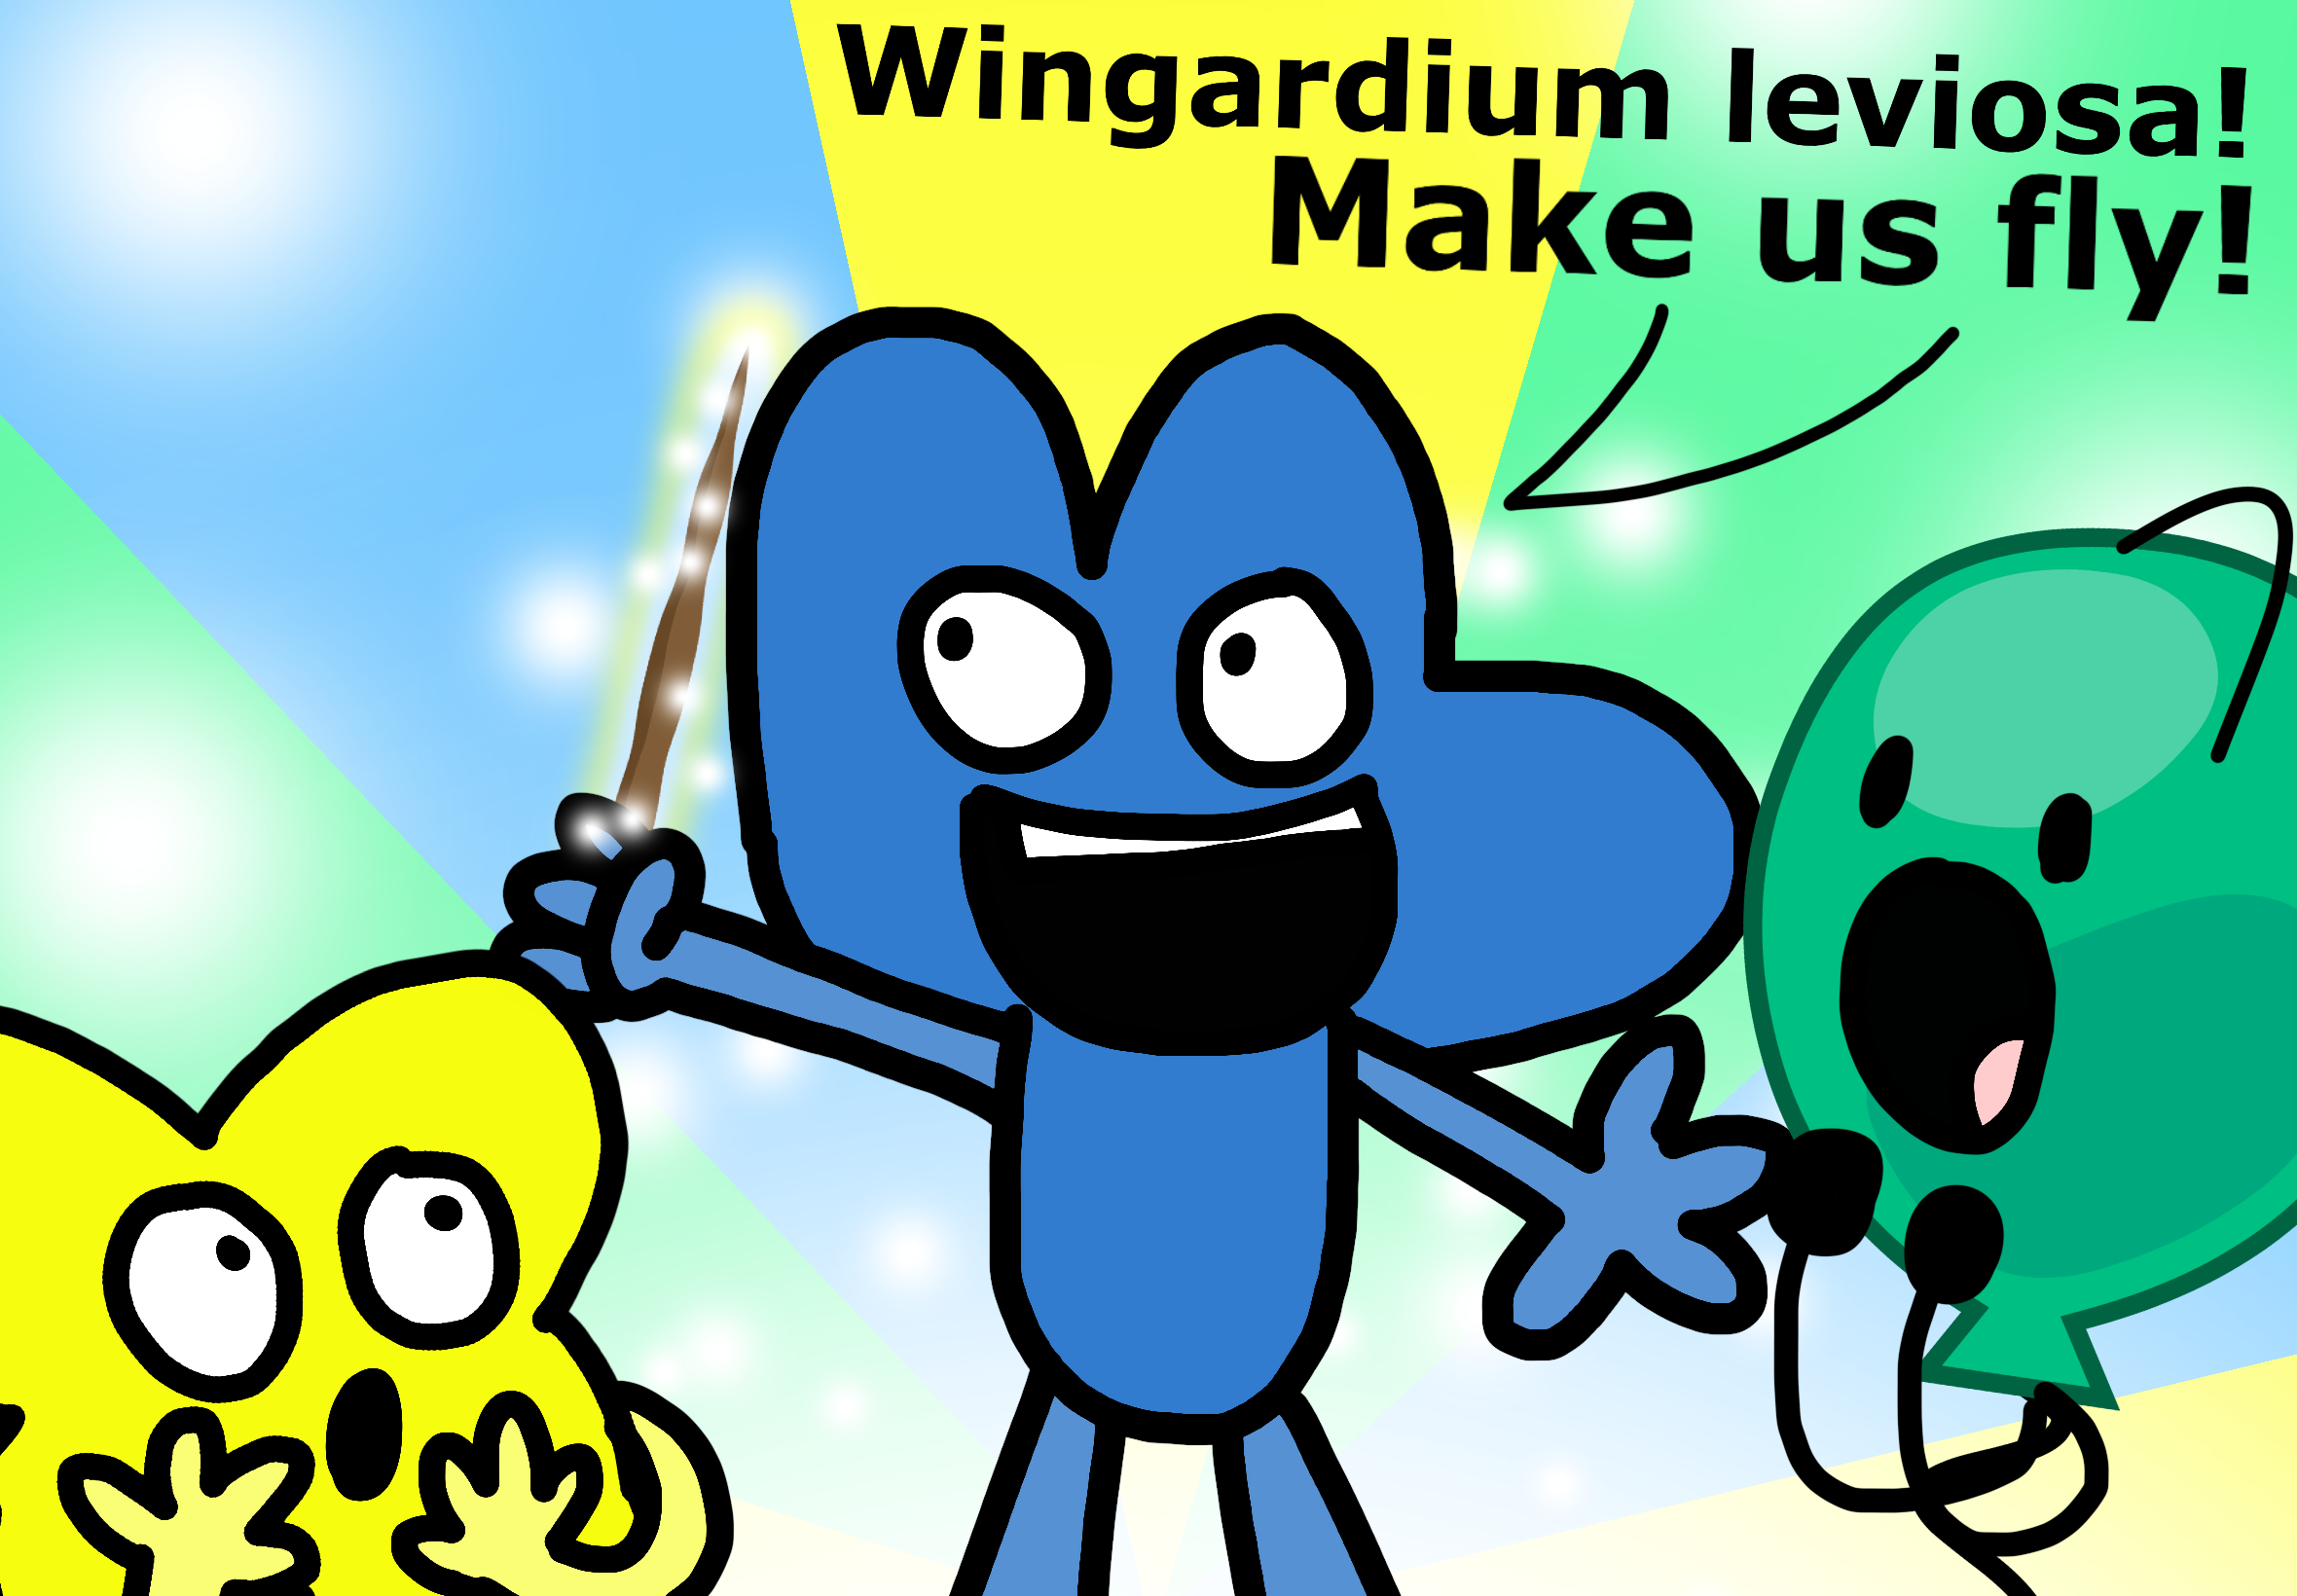 Wingardium Leviosa Make Us Fly! by SugarGlazeNavalBlock on DeviantArt